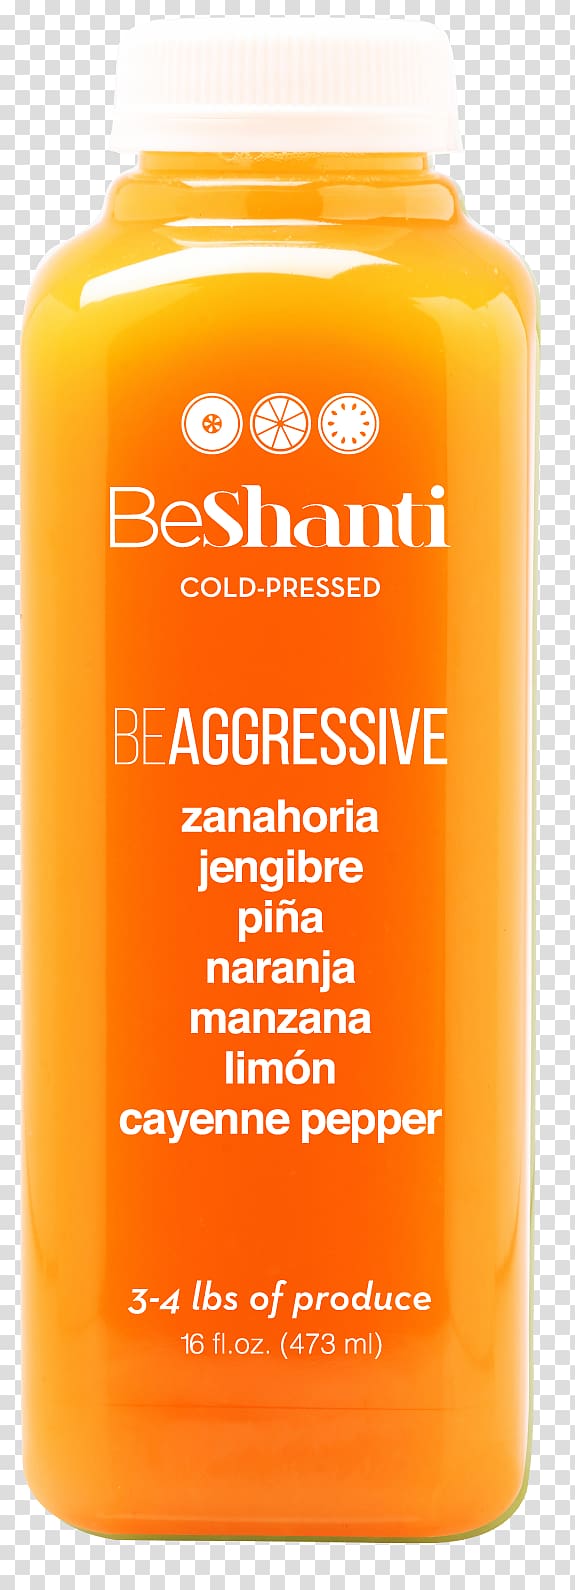 Orange drink Orange juice BeShanti Cold-pressed juice, juice transparent background PNG clipart